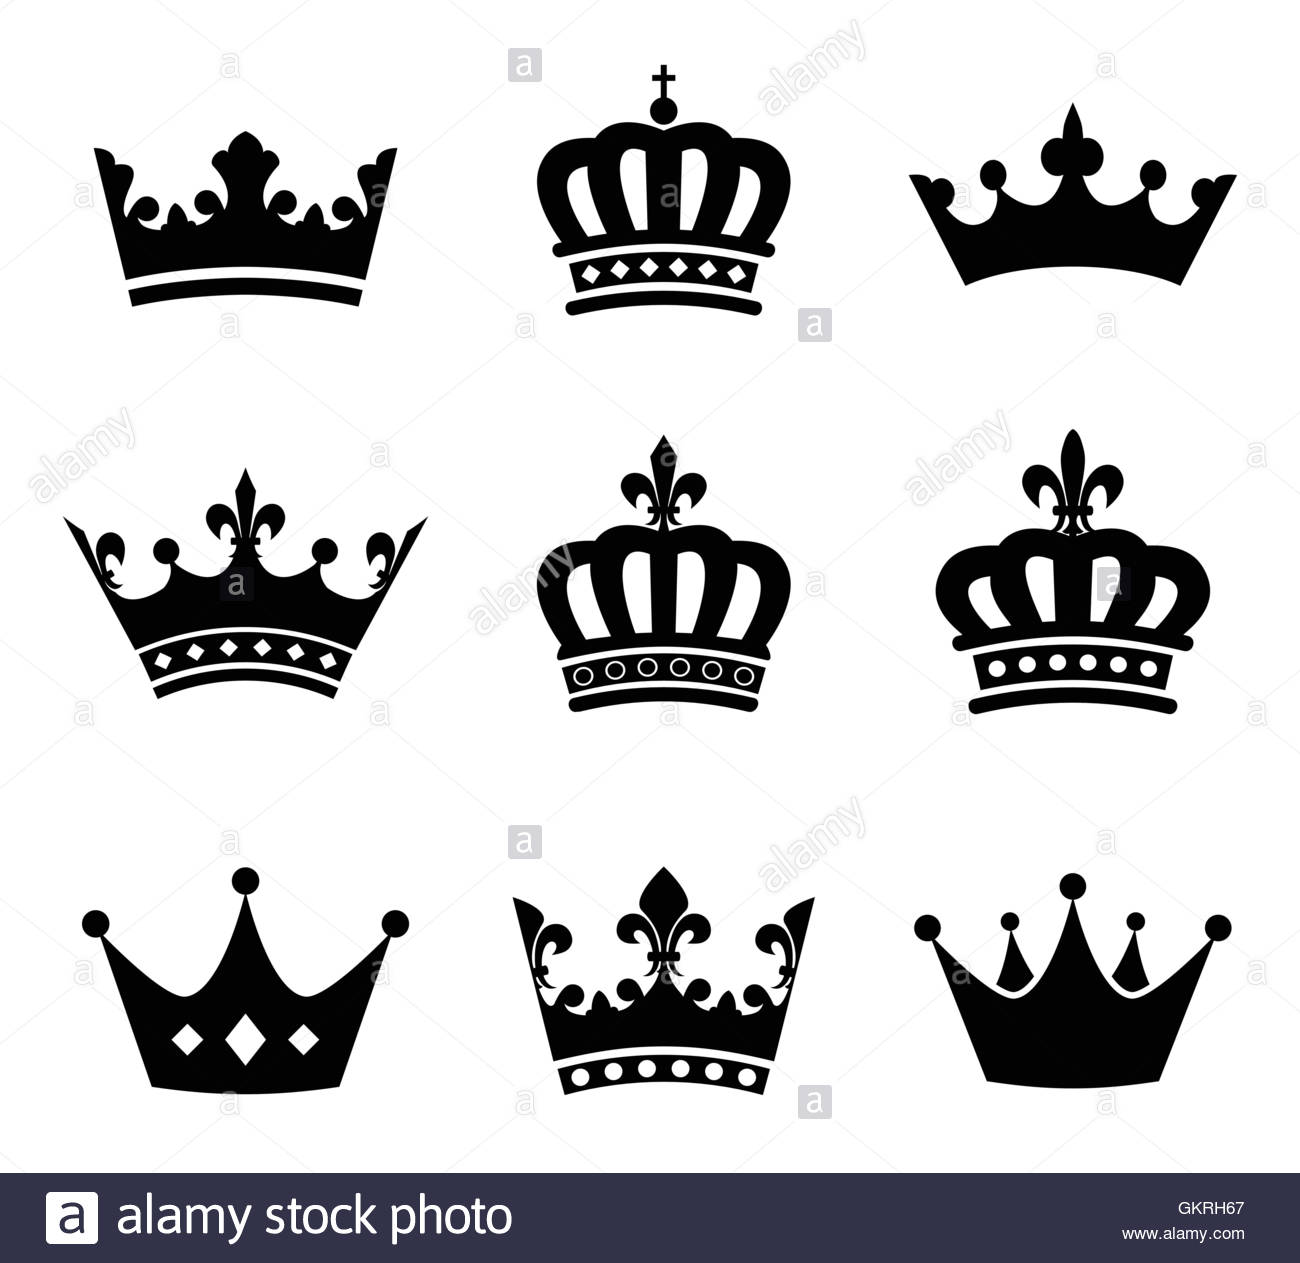 Corona, crown, princess, royal icon | Icon search engine